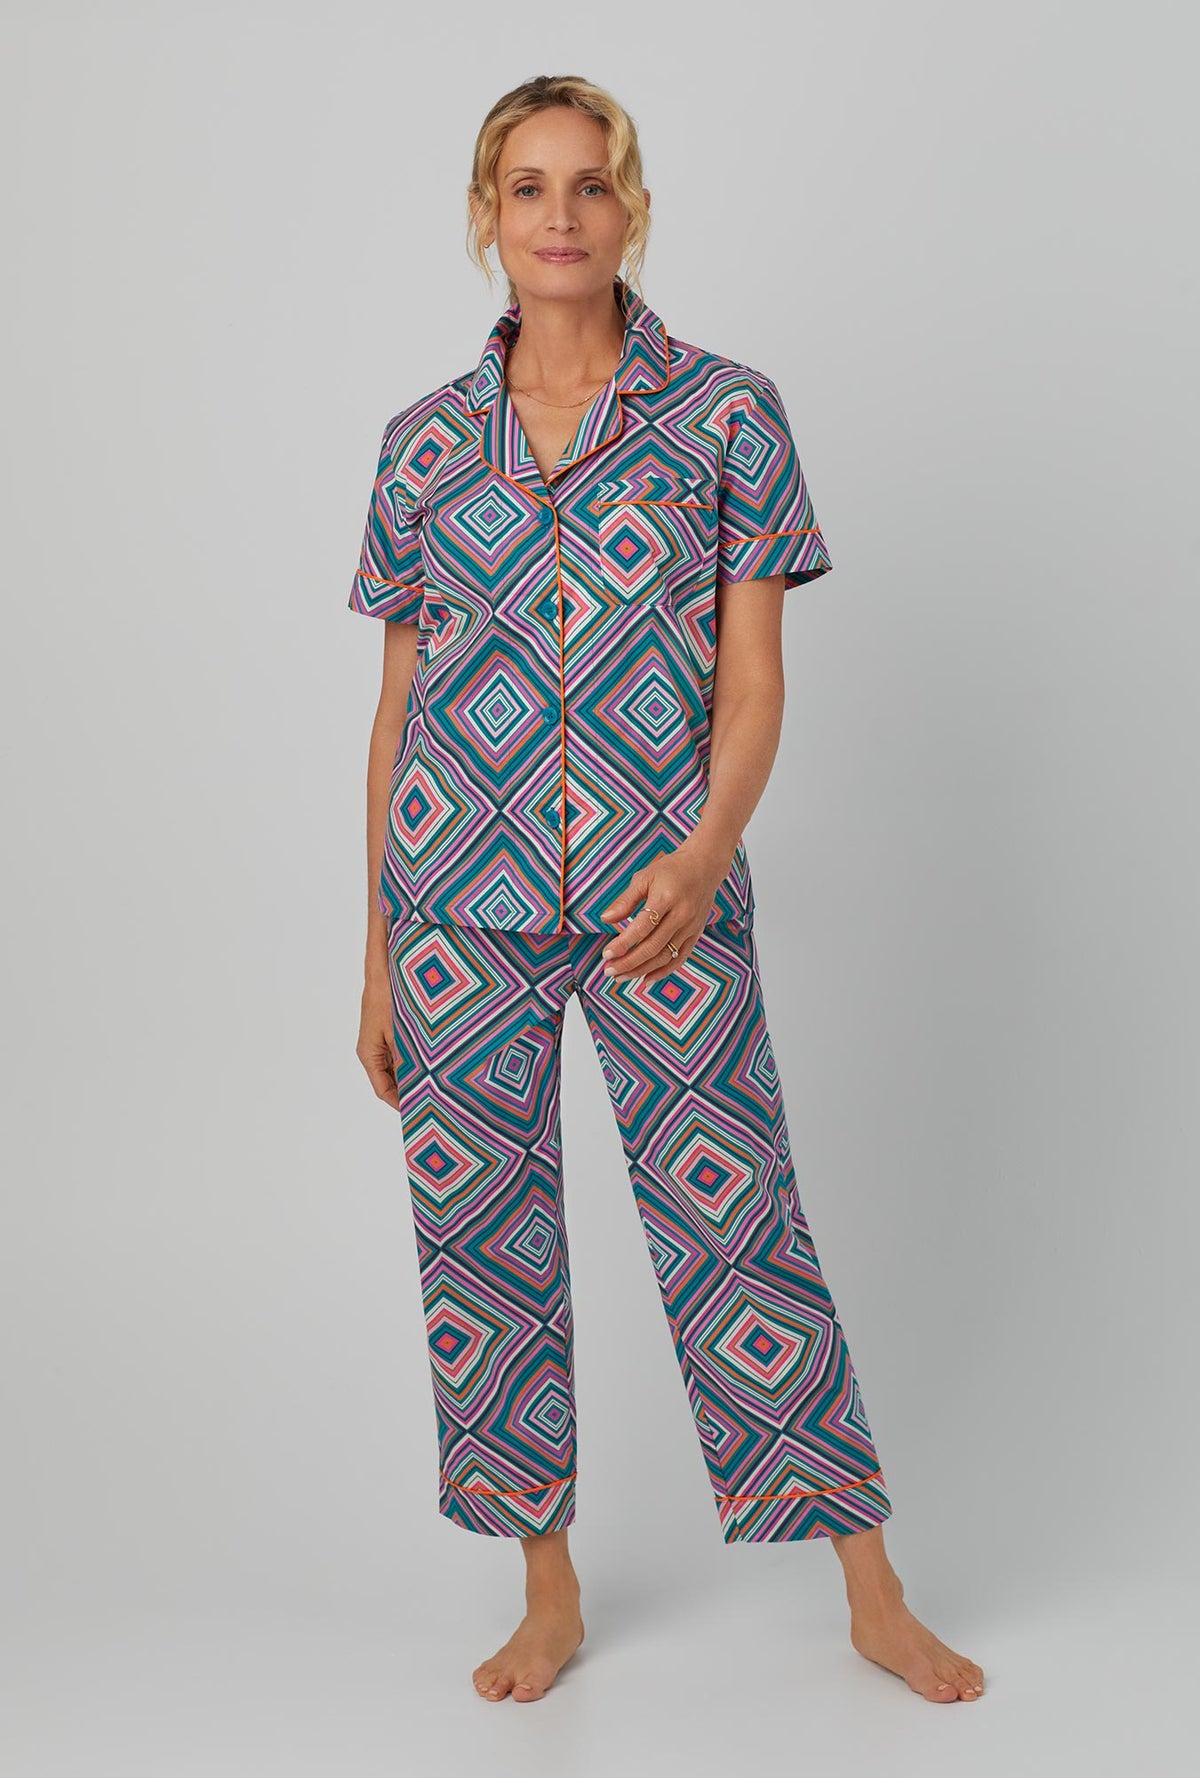 A lady wearing Short Sleeve Classic Woven Cotton Poplin Cropped PJ Set with diamond geo print